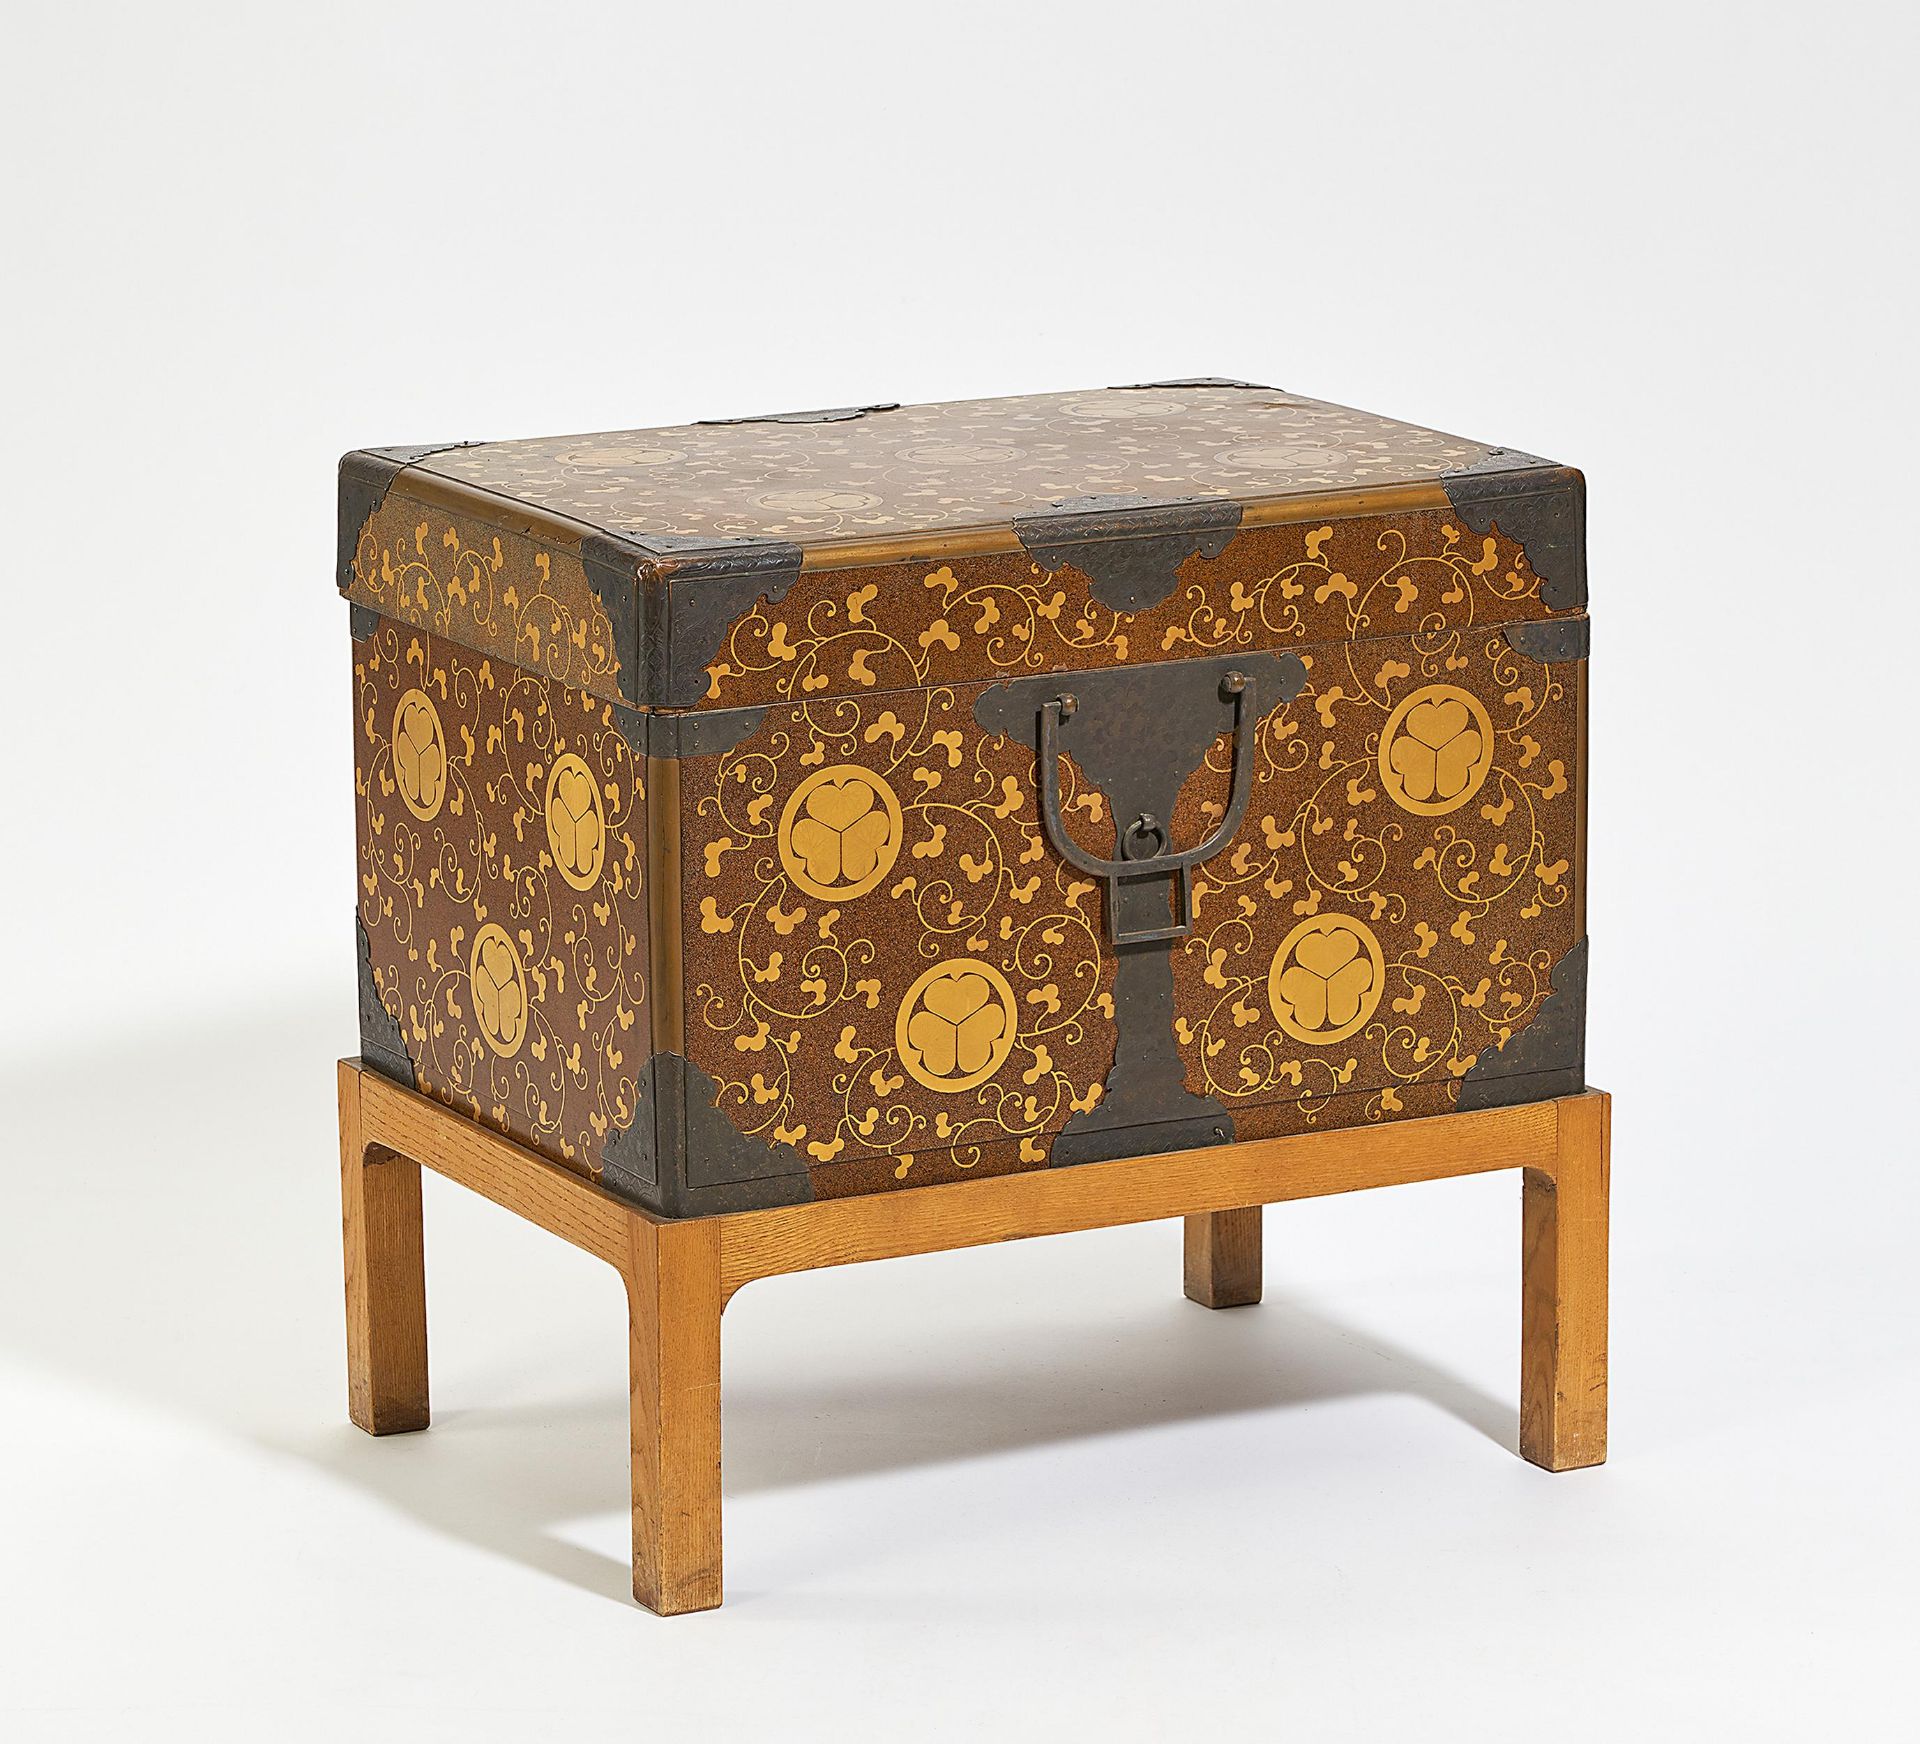 LARGE TRAVELING BOX HASAMIBAKO. Japan. Edo period (1603-1868). Wood with gold powder lacquer (